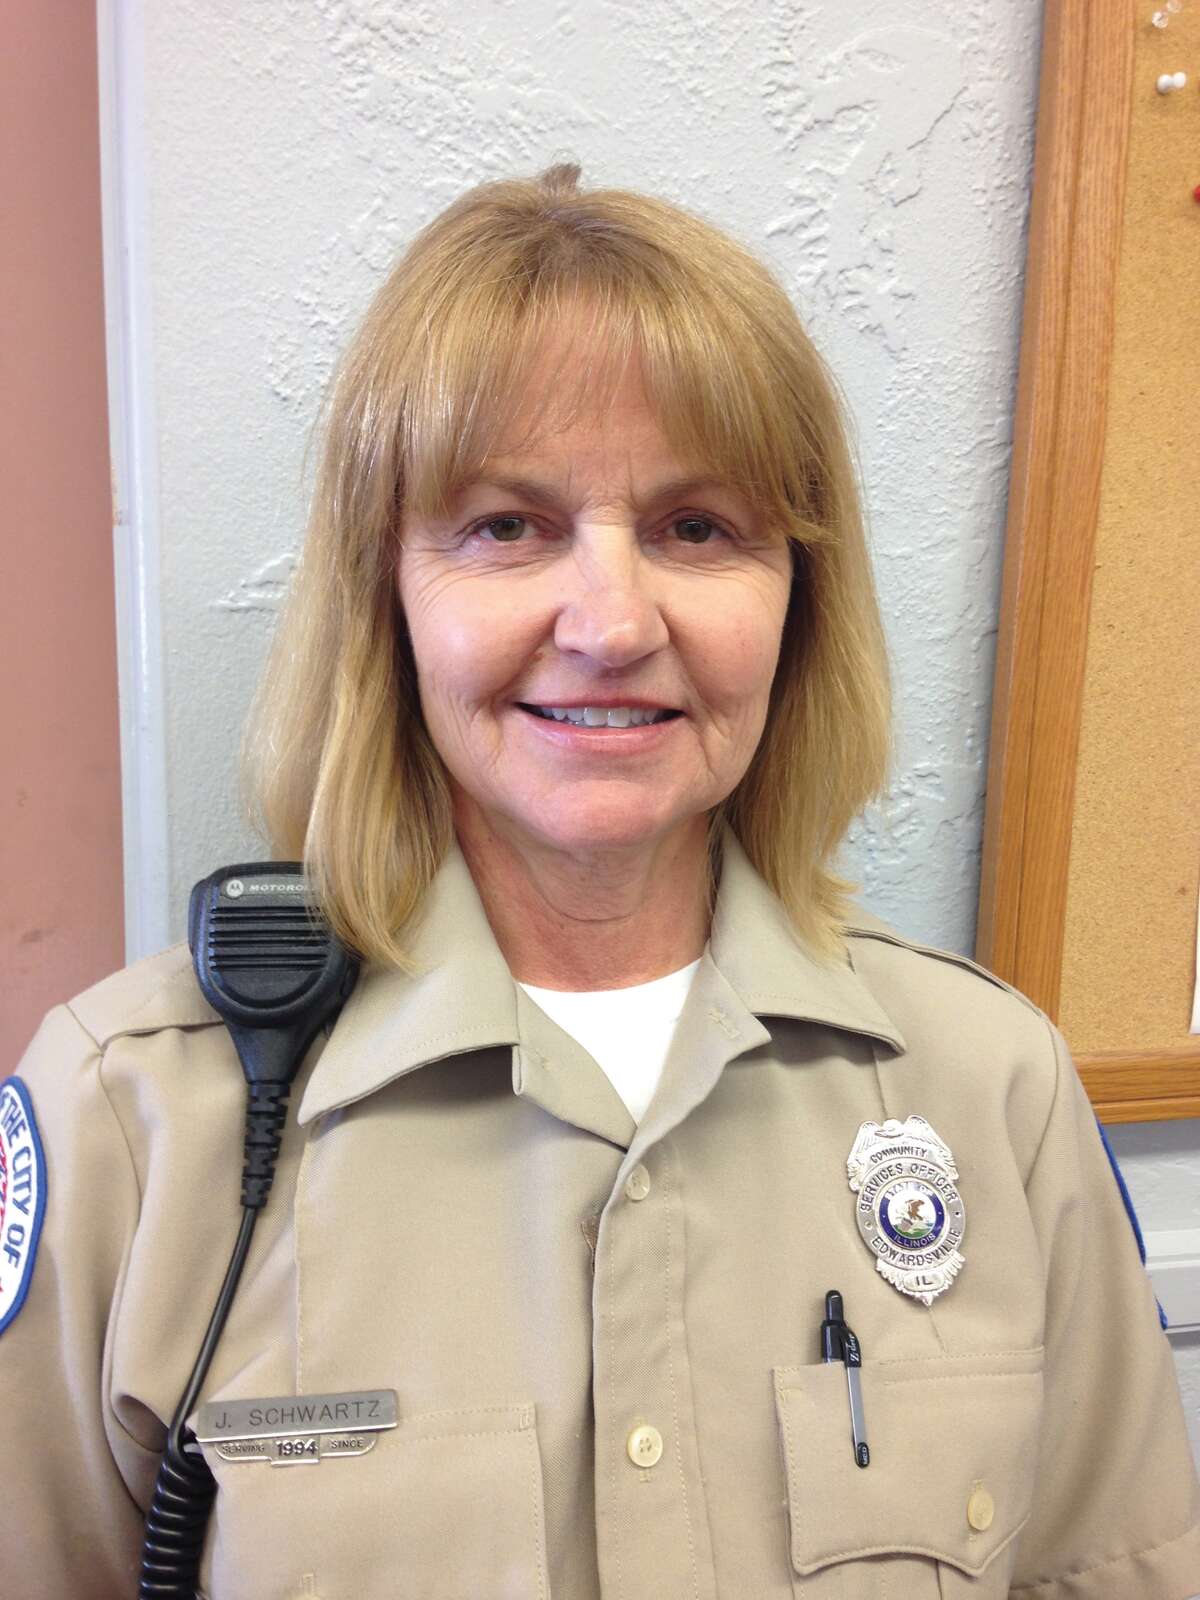 Edwardsville Police Department's Community Service Officer Joyce Schwartz helped fulfill an Edwardsville woman's dying wish to get one last taste of a Screwball ice cream treat last week.